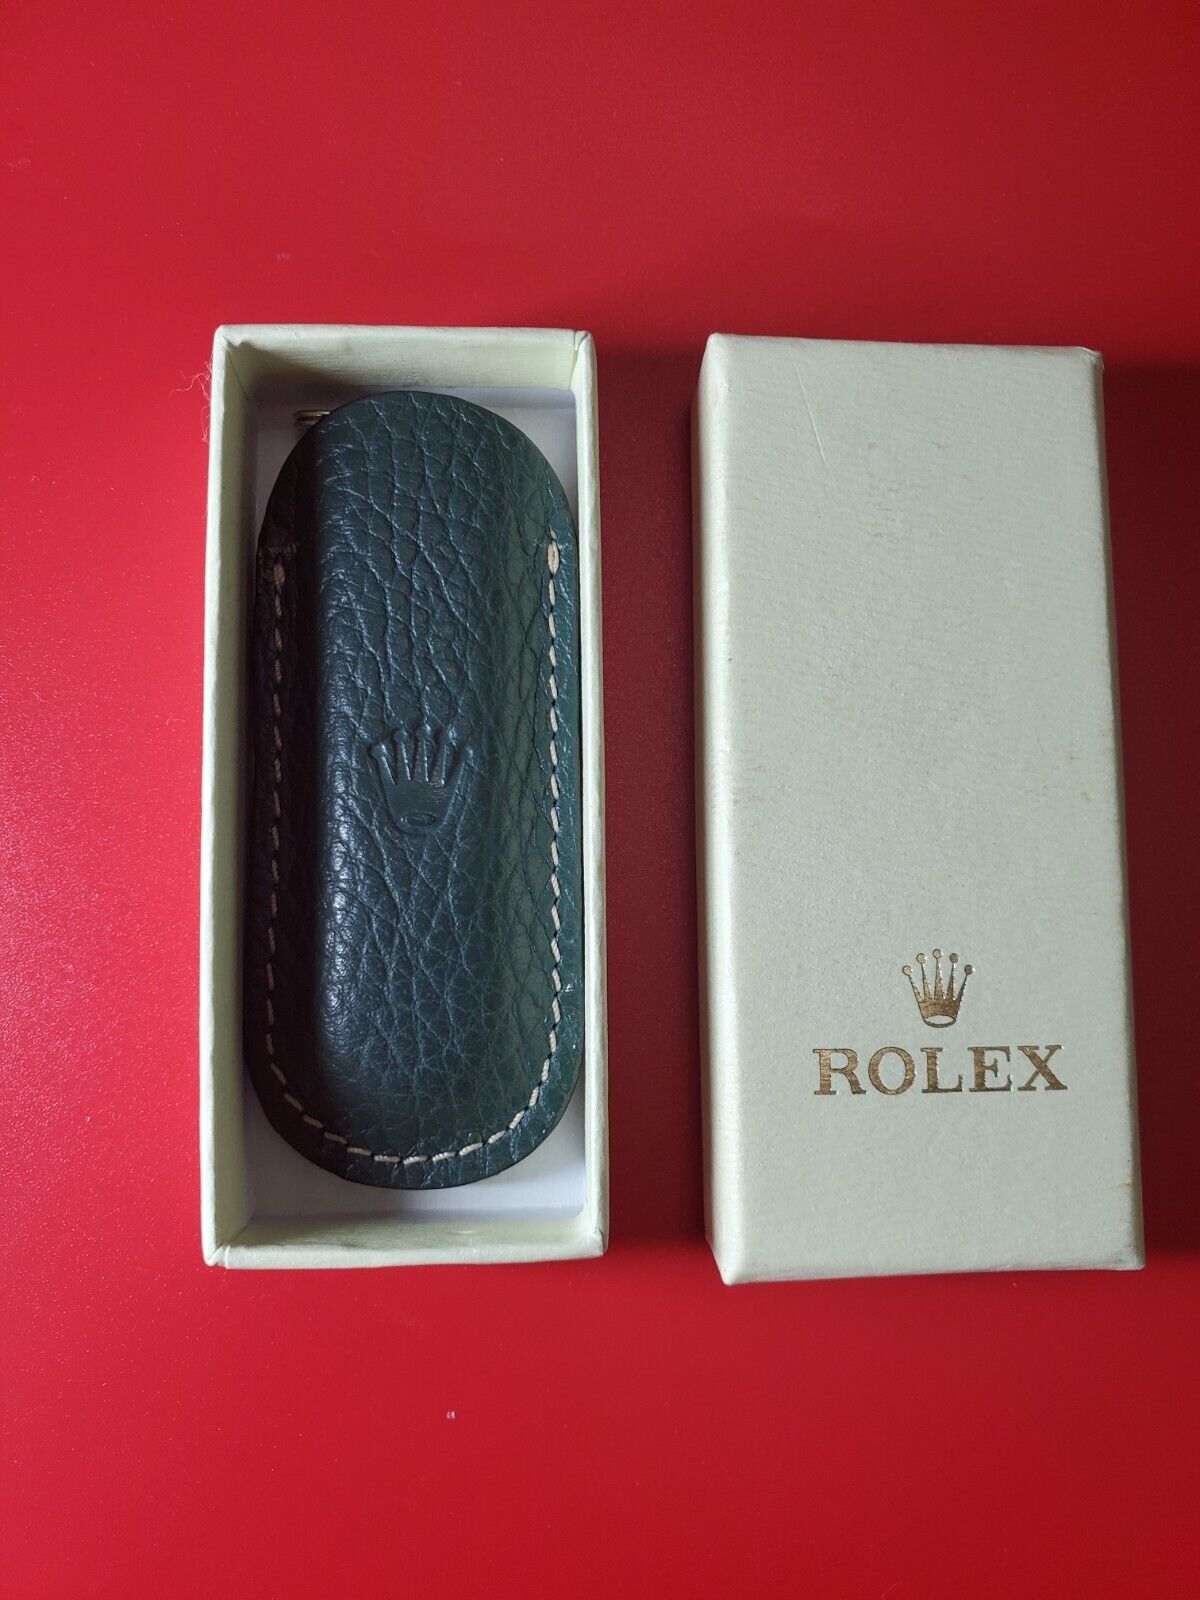 NEW UNUSED ROLEX VICTORINOX Swiss Army Pocketknife in original box